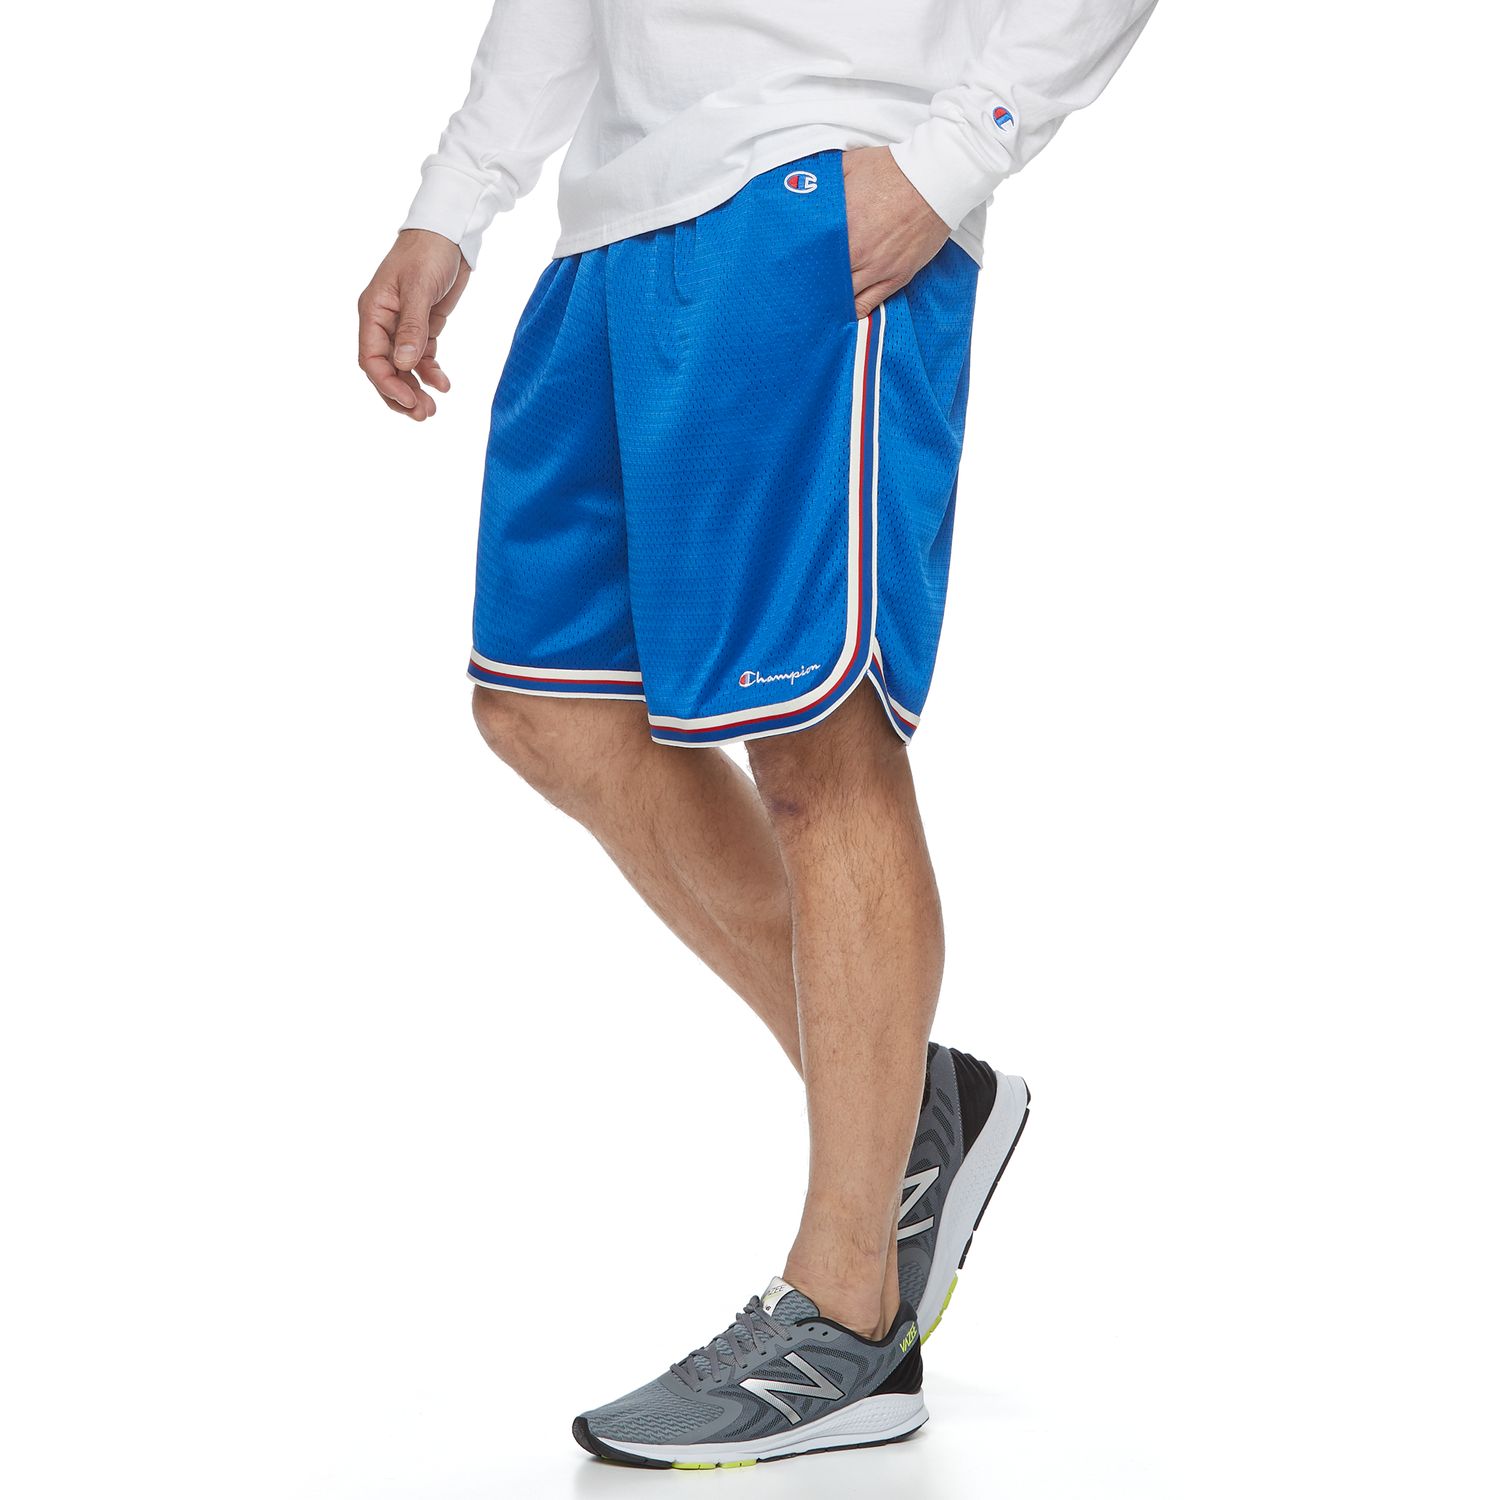 reebok men's 5 core running shorts - 58 